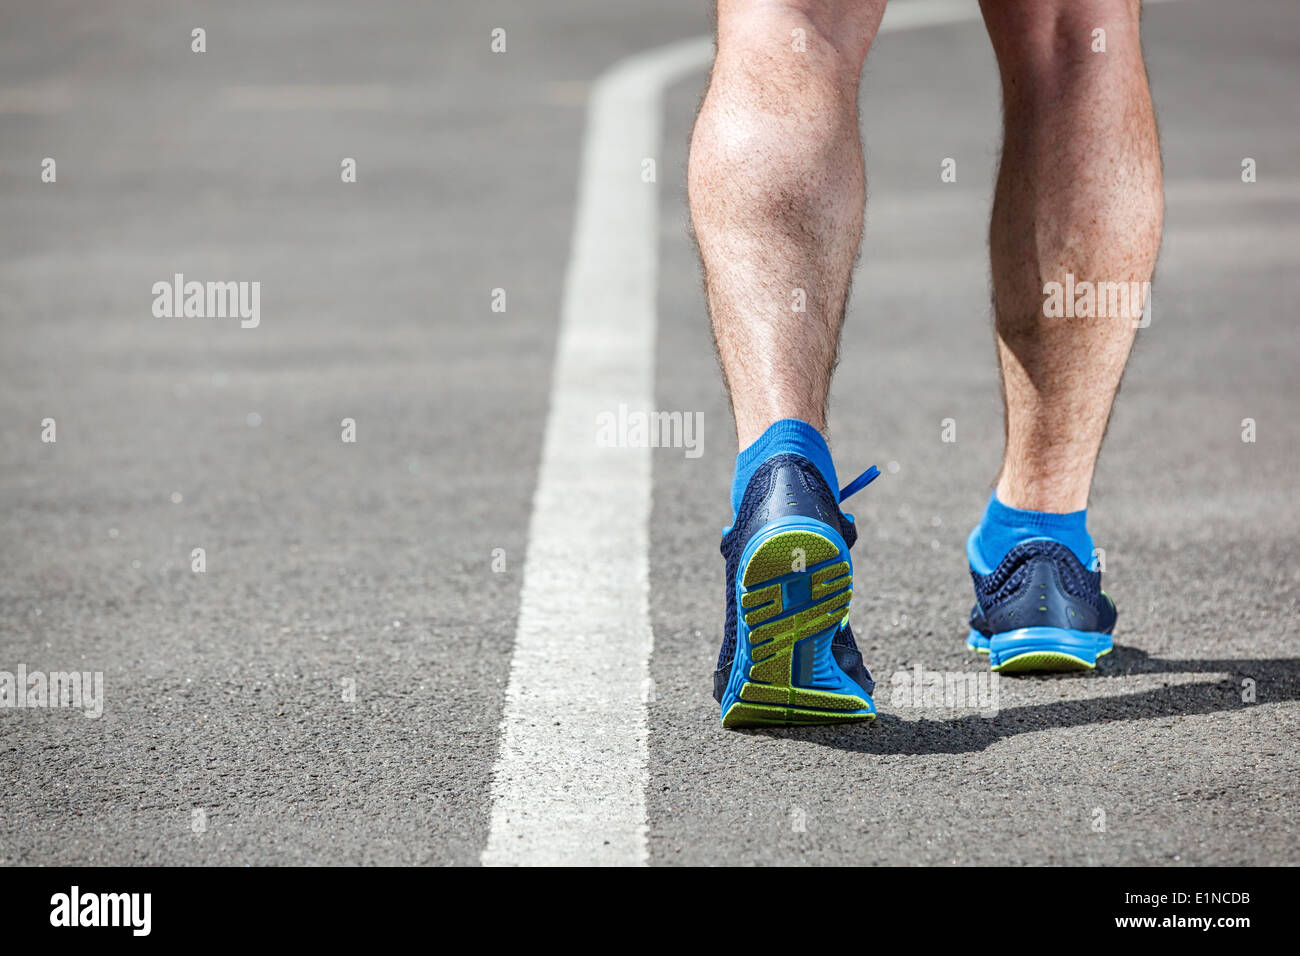 Runner feet running on stadium closeup on shoe - back view. Stock Photo